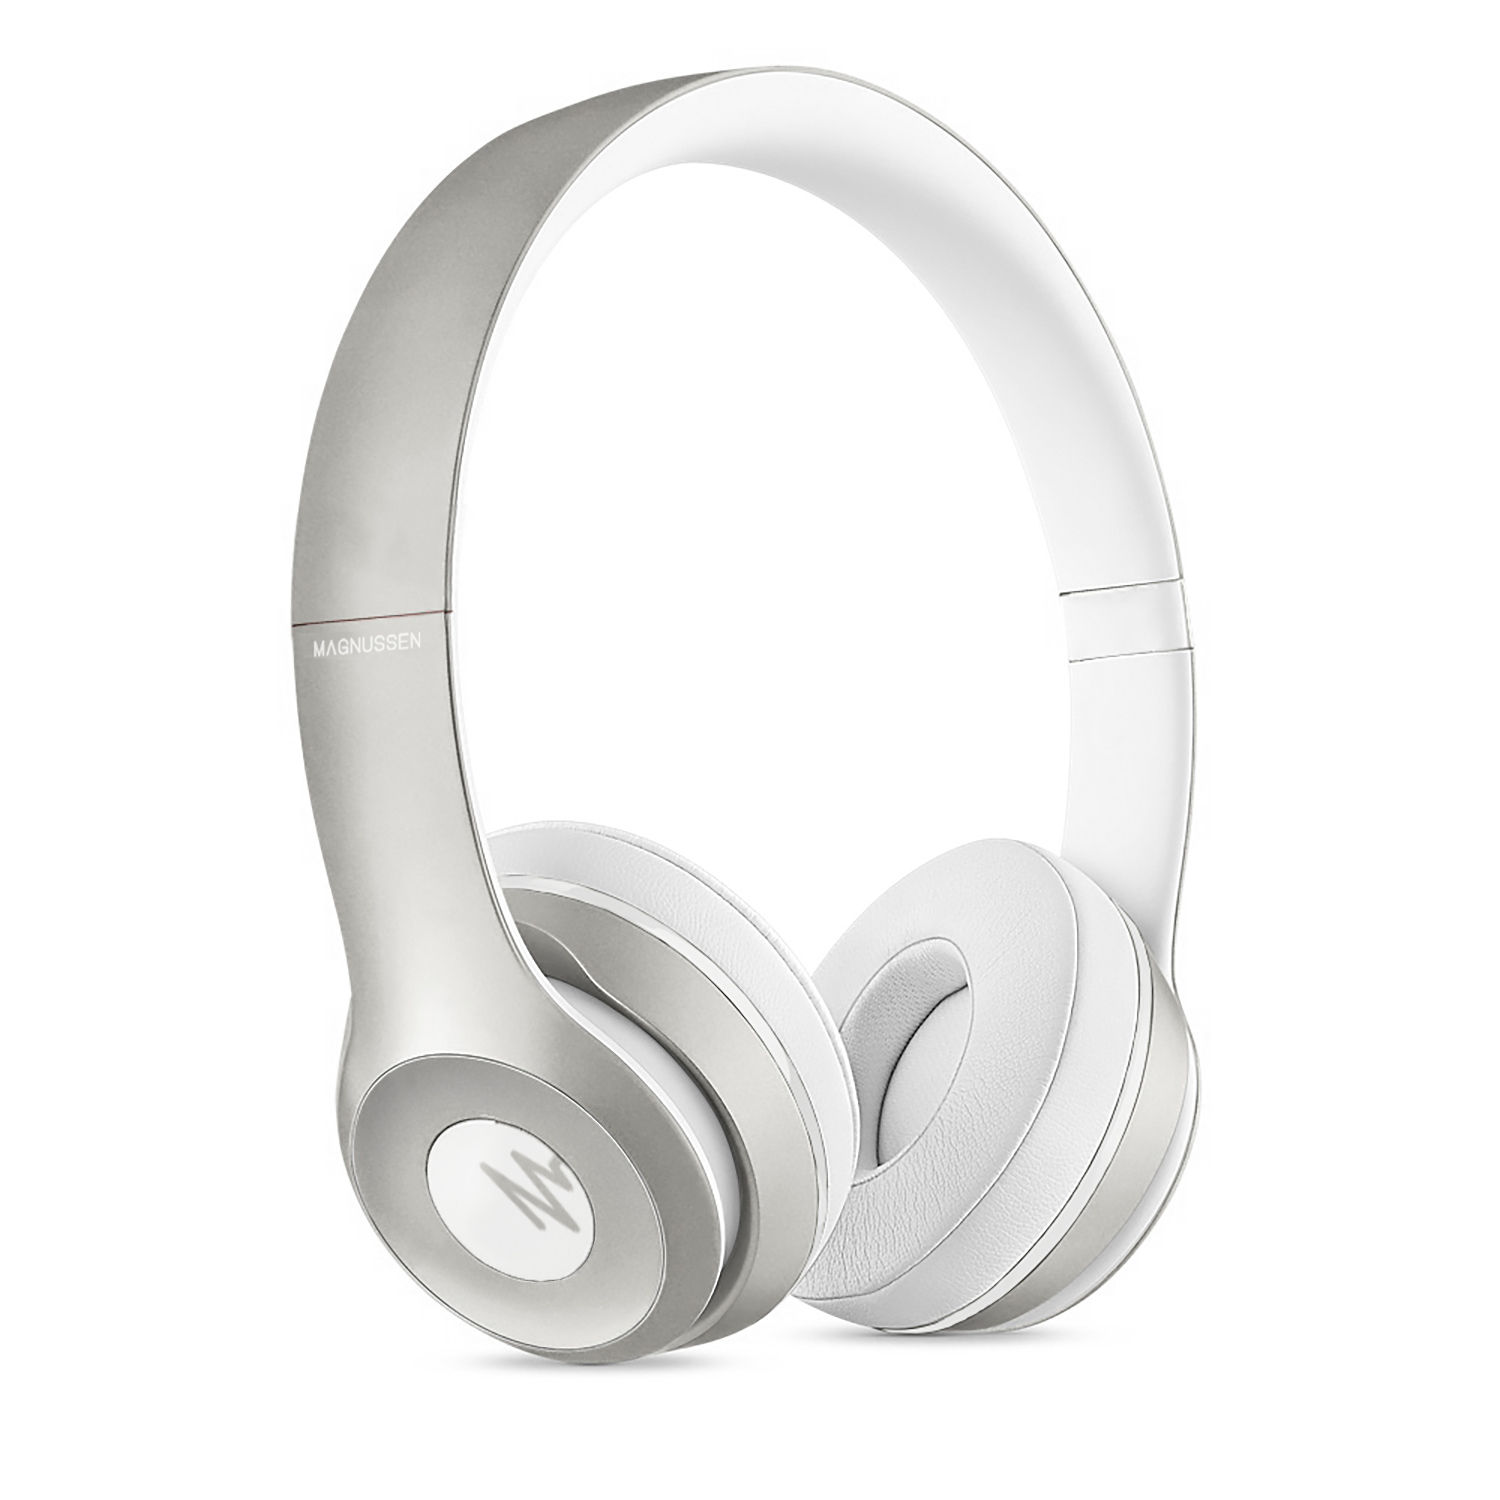 Auscultadores Bluetooth Magnusen H2 - Headphones sem fio | Sport Zone MKP